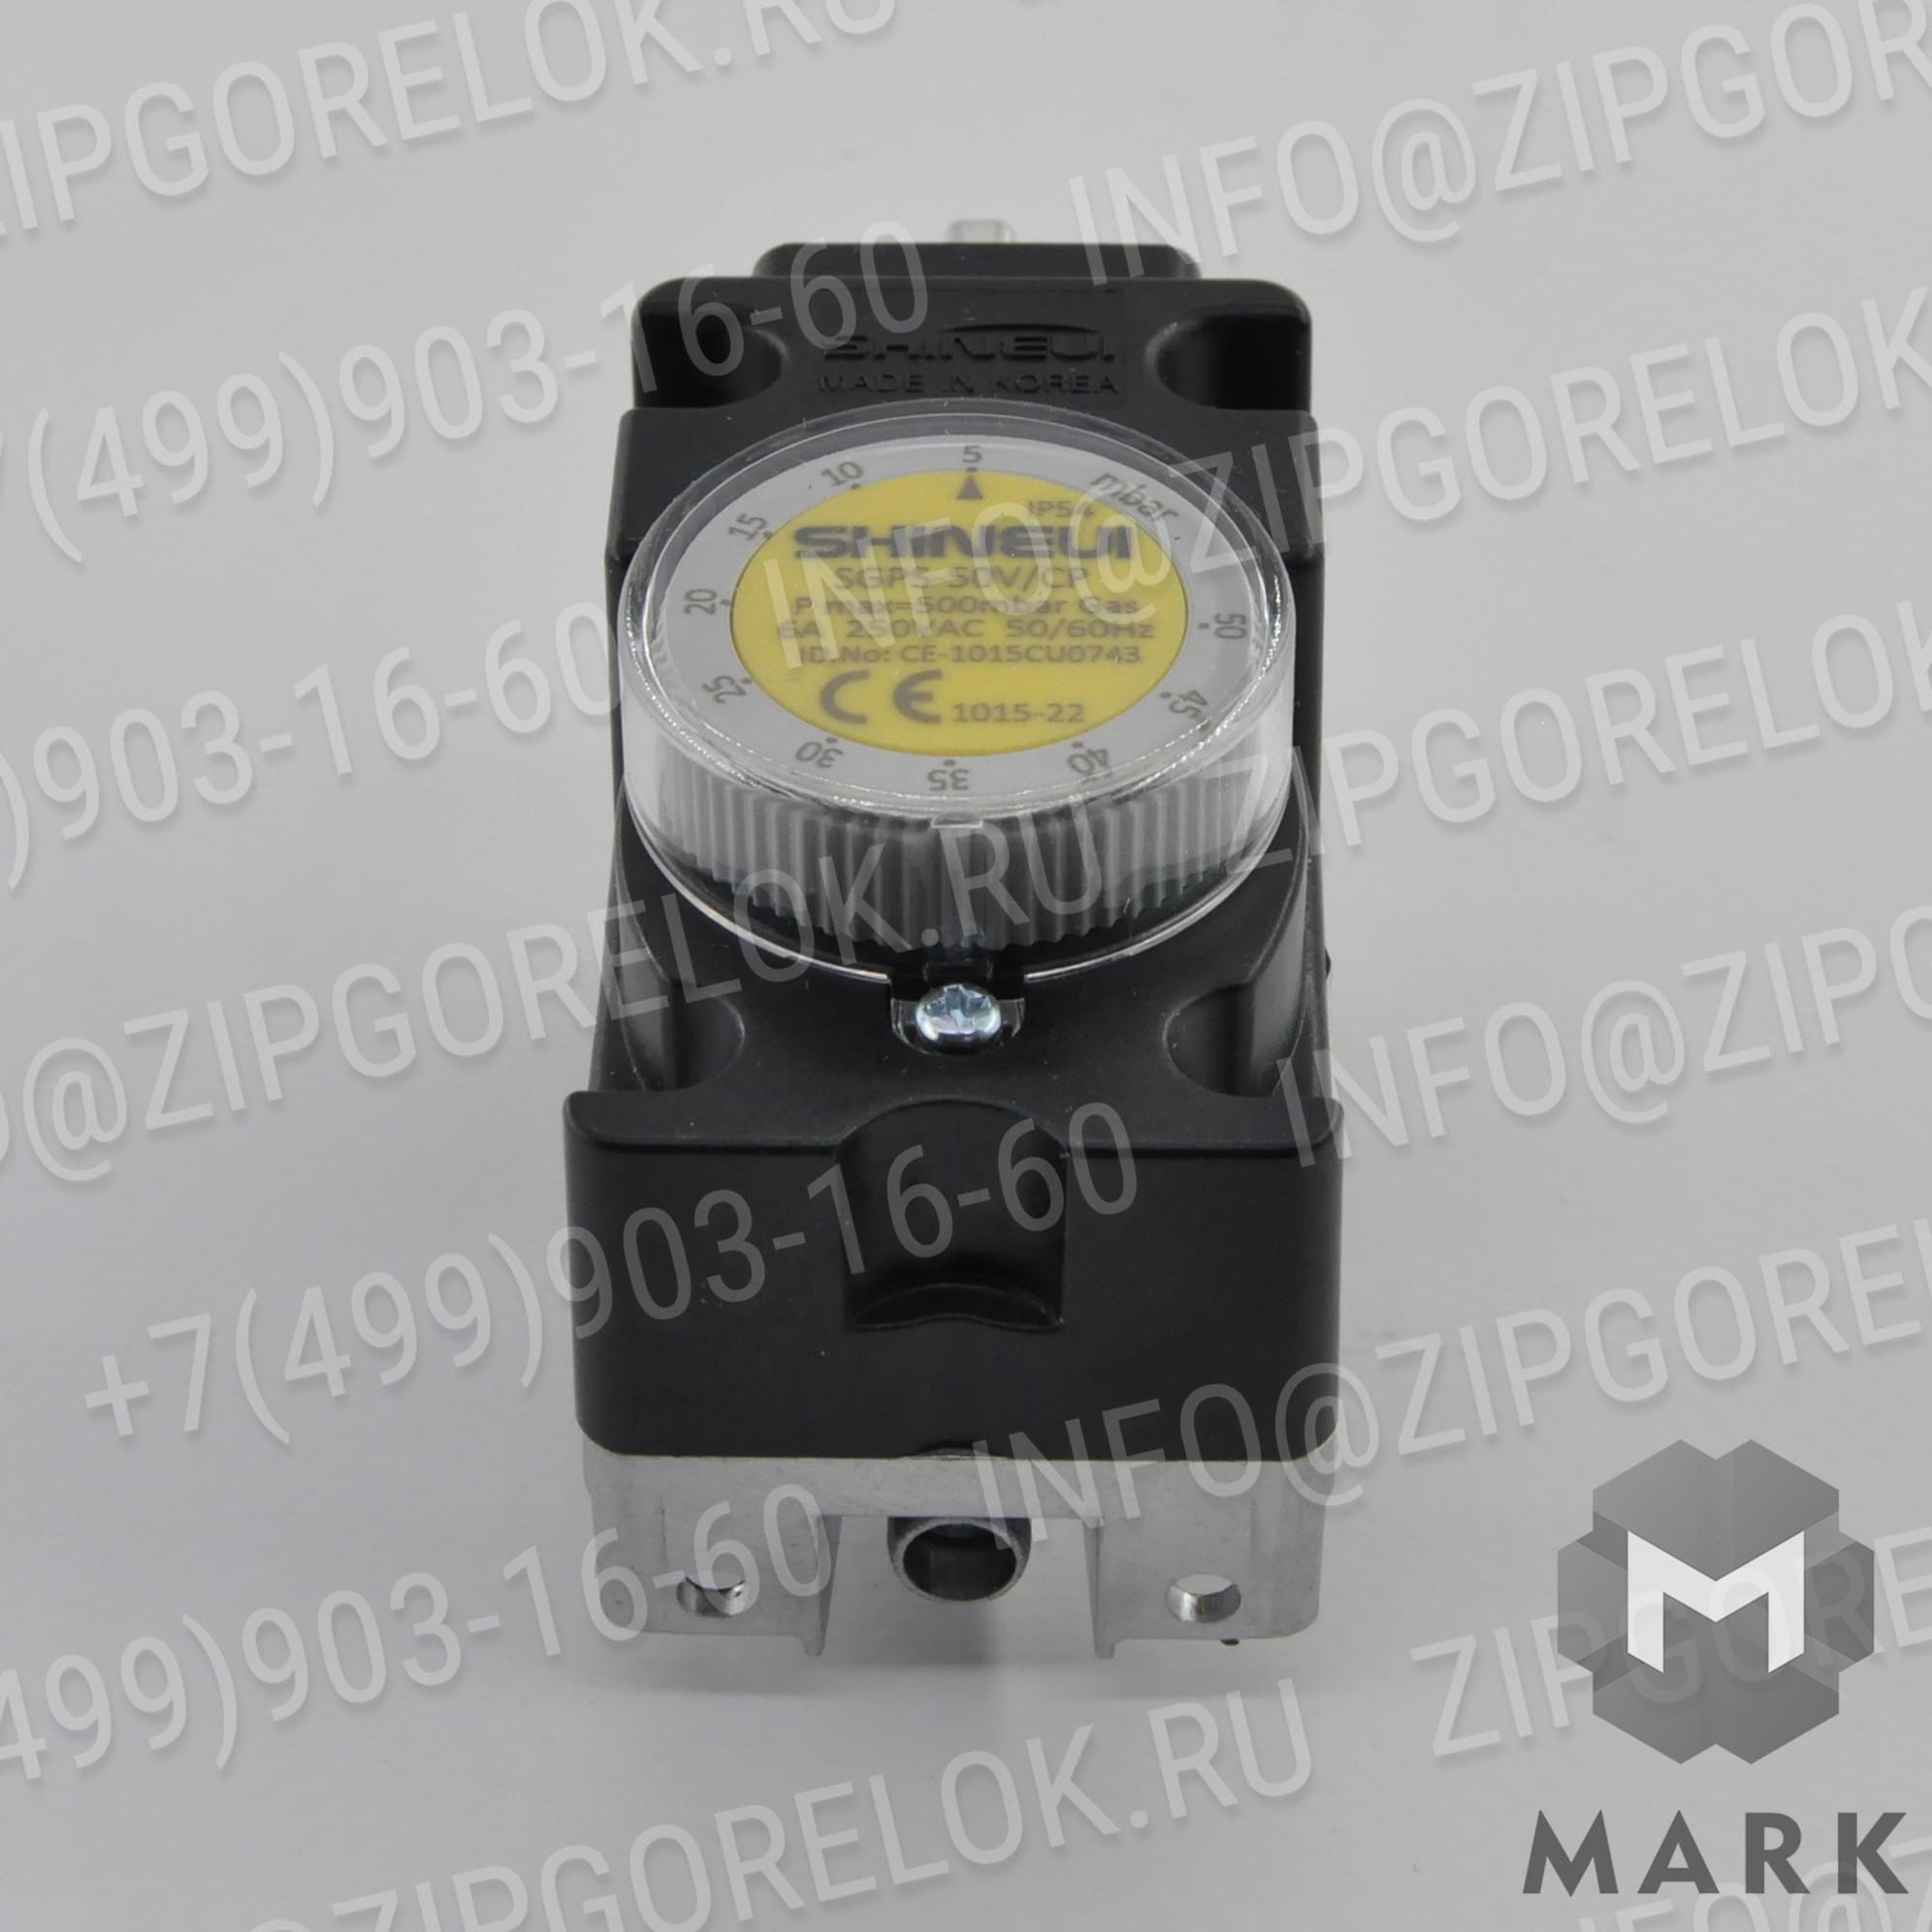 SGPS-50V-CP Купить 3013117 Коллектор Riello / Риелло | Zipgorelok.ru